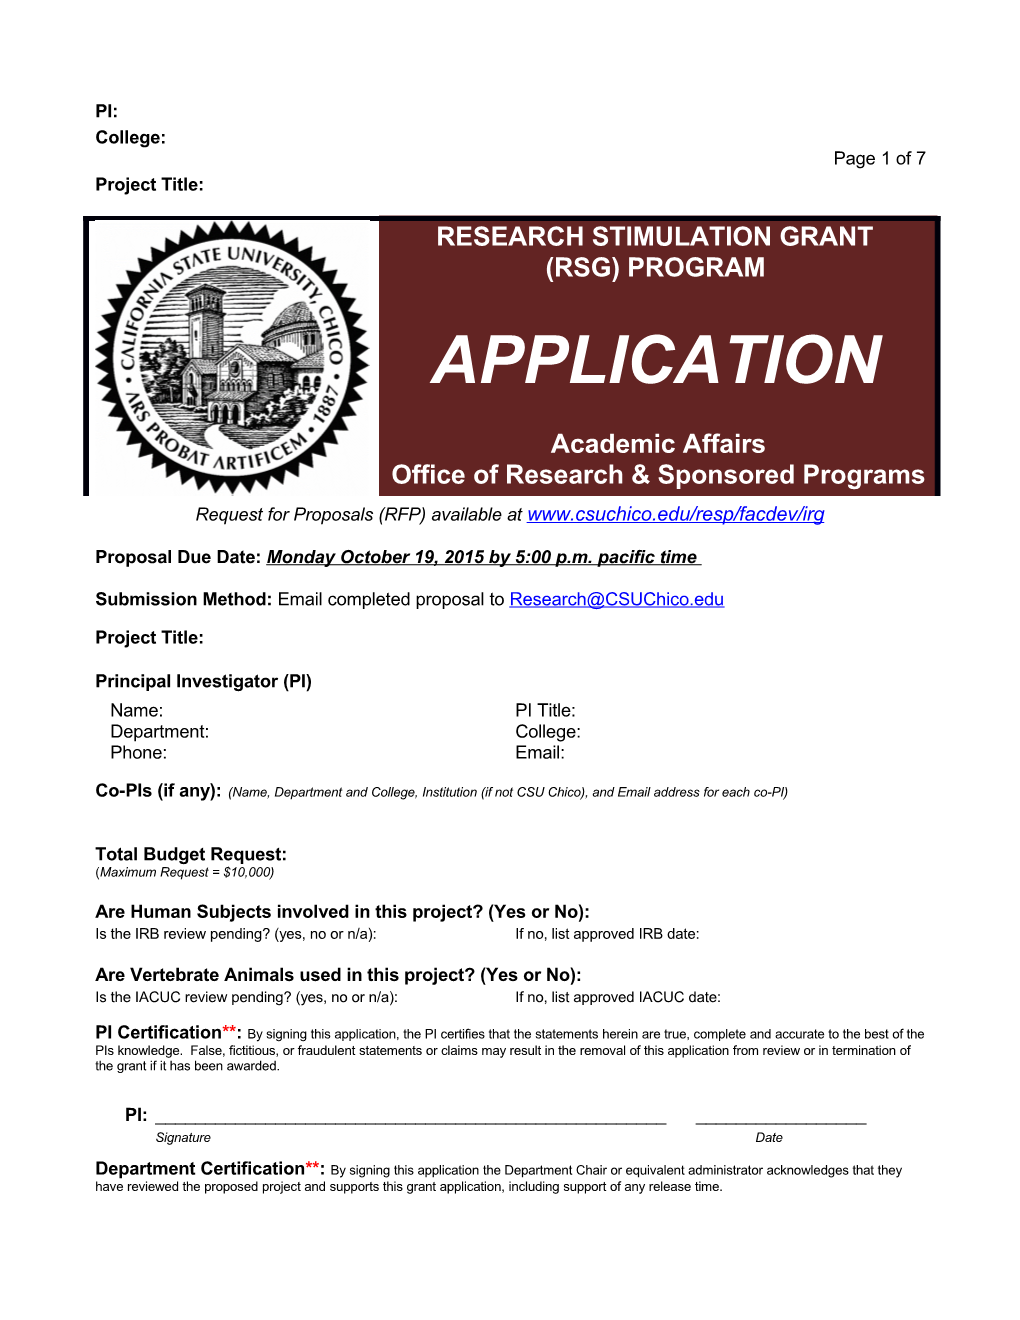 Research Stimulation Grant (RSG) Program Application